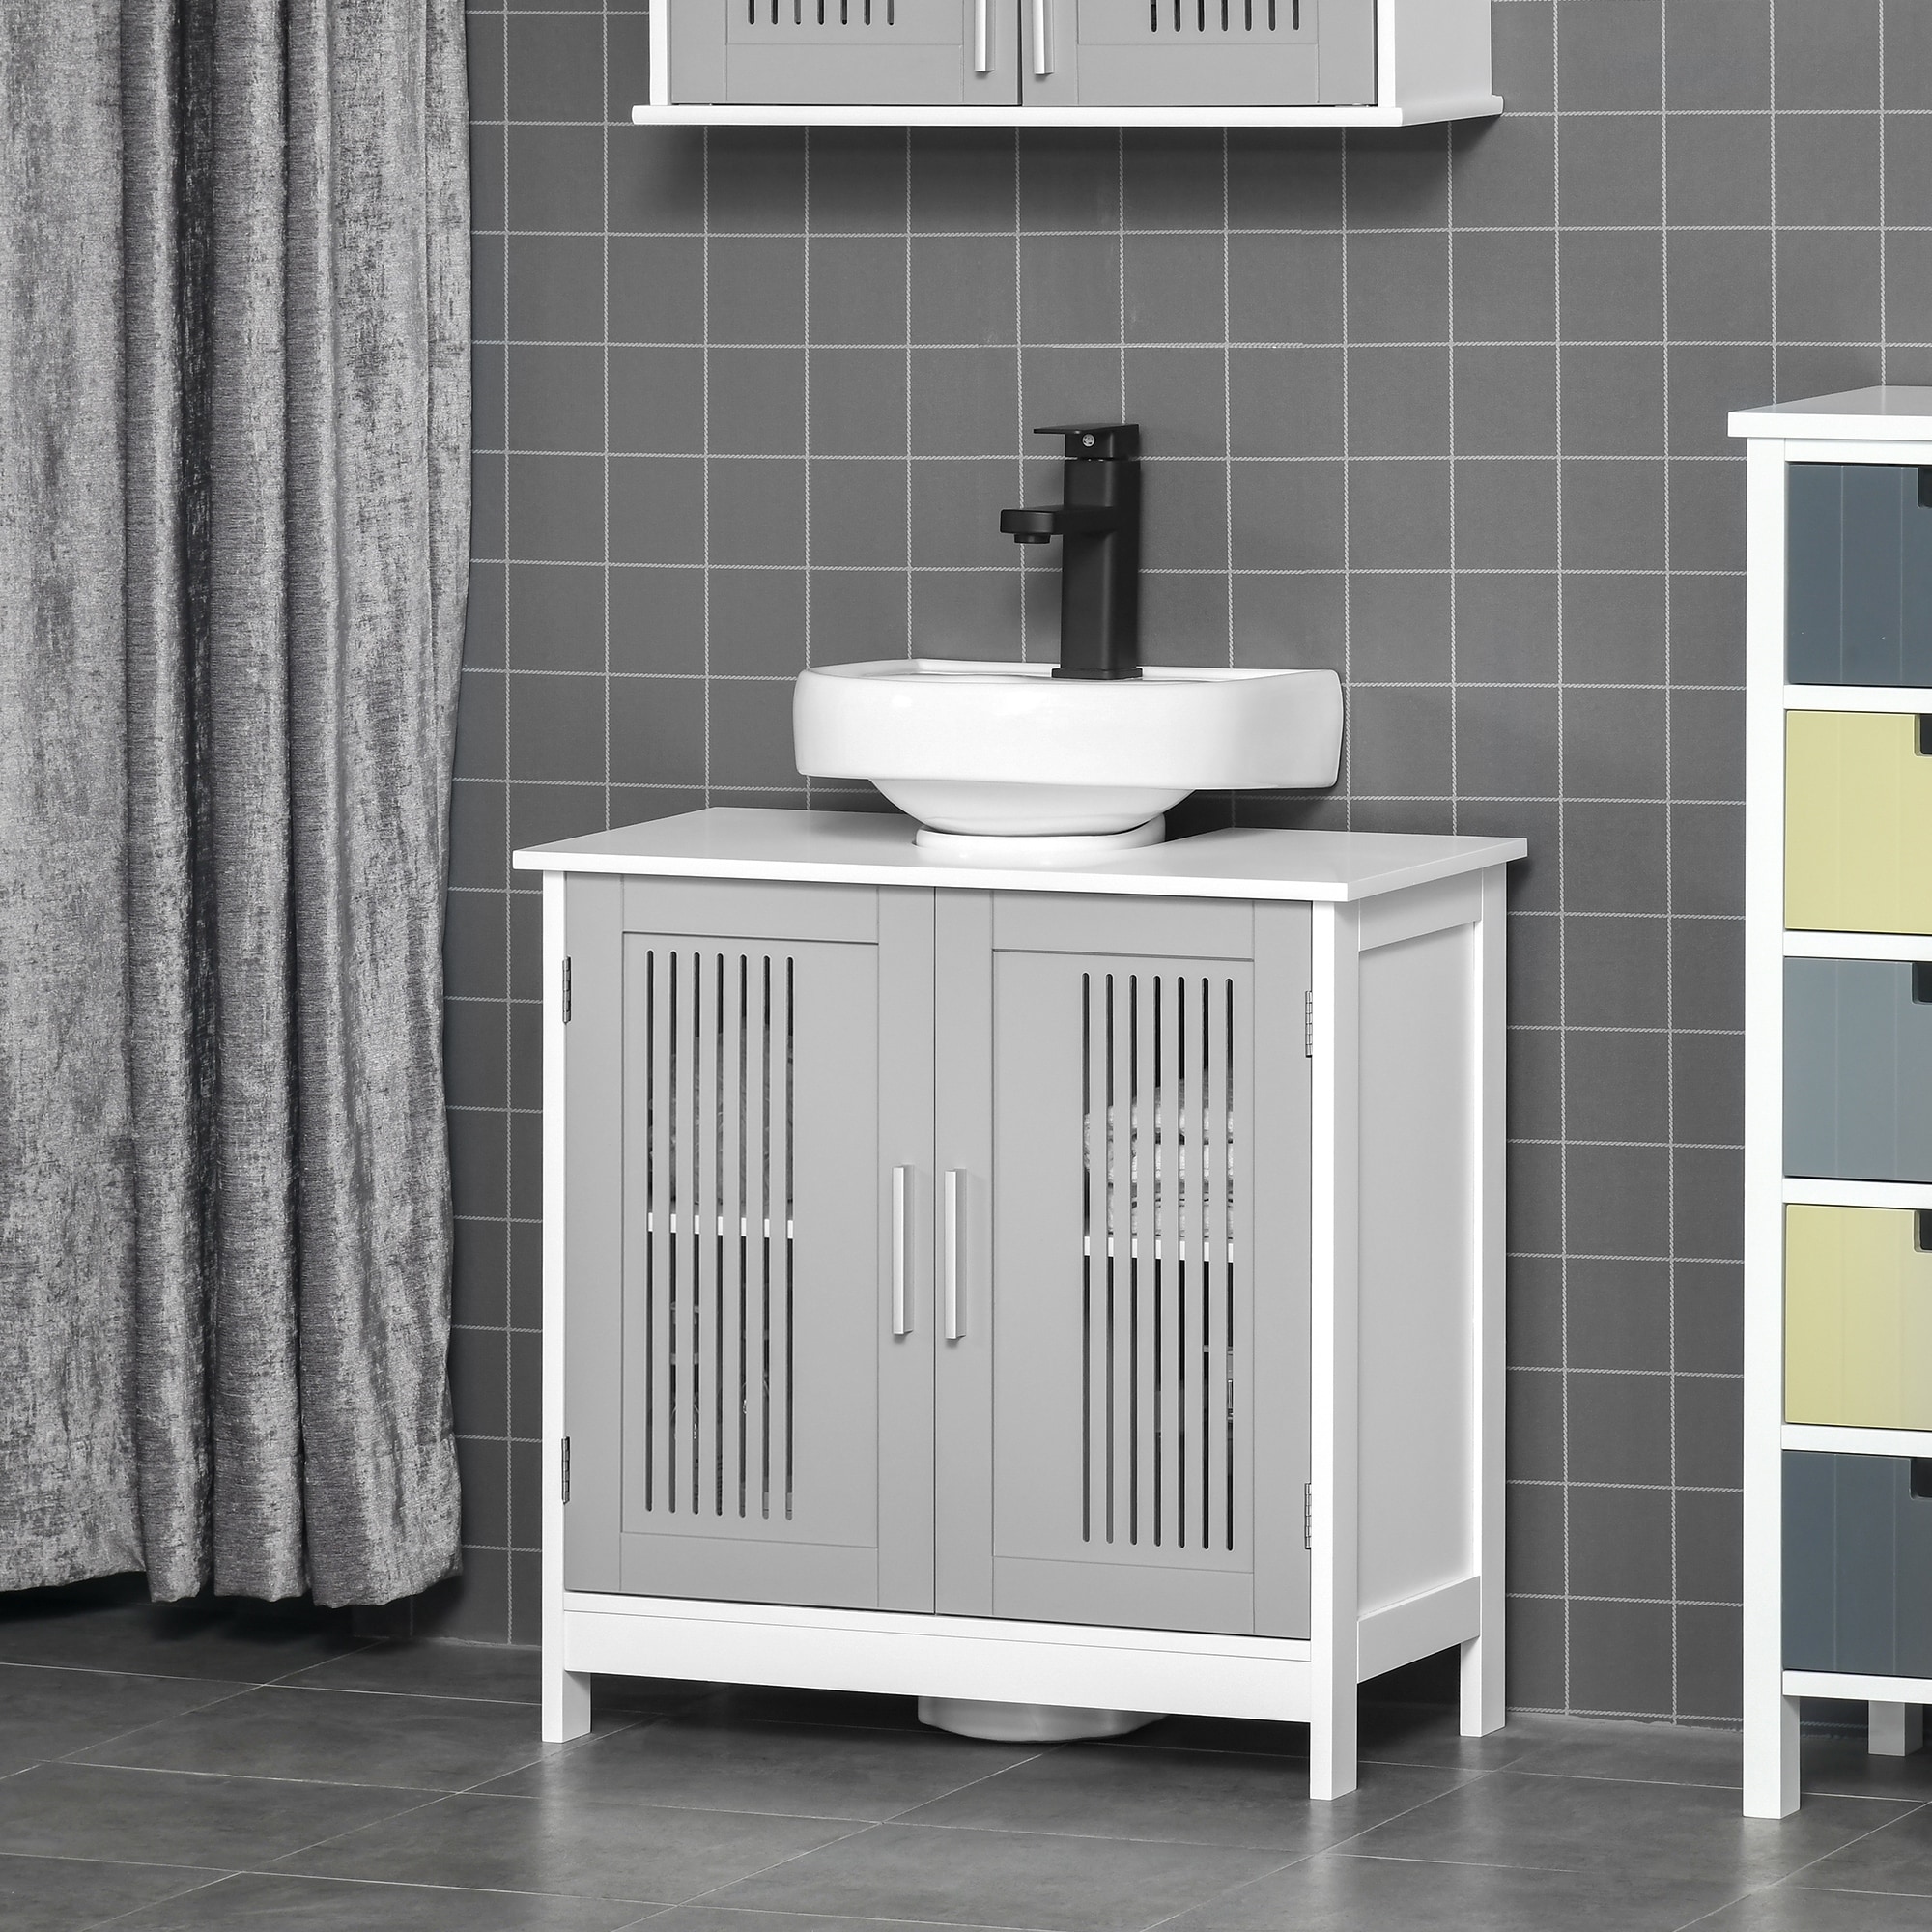 https://ak1.ostkcdn.com/images/products/is/images/direct/3b28726c1e79895046d98db4f595248f83ce4c48/kleankin-Modern-Under-Sink-Cabinet-with-2-Doors%2C-Bathroom-Vanity-Unit%2C-Pedestal-Under-Sink-Design.jpg